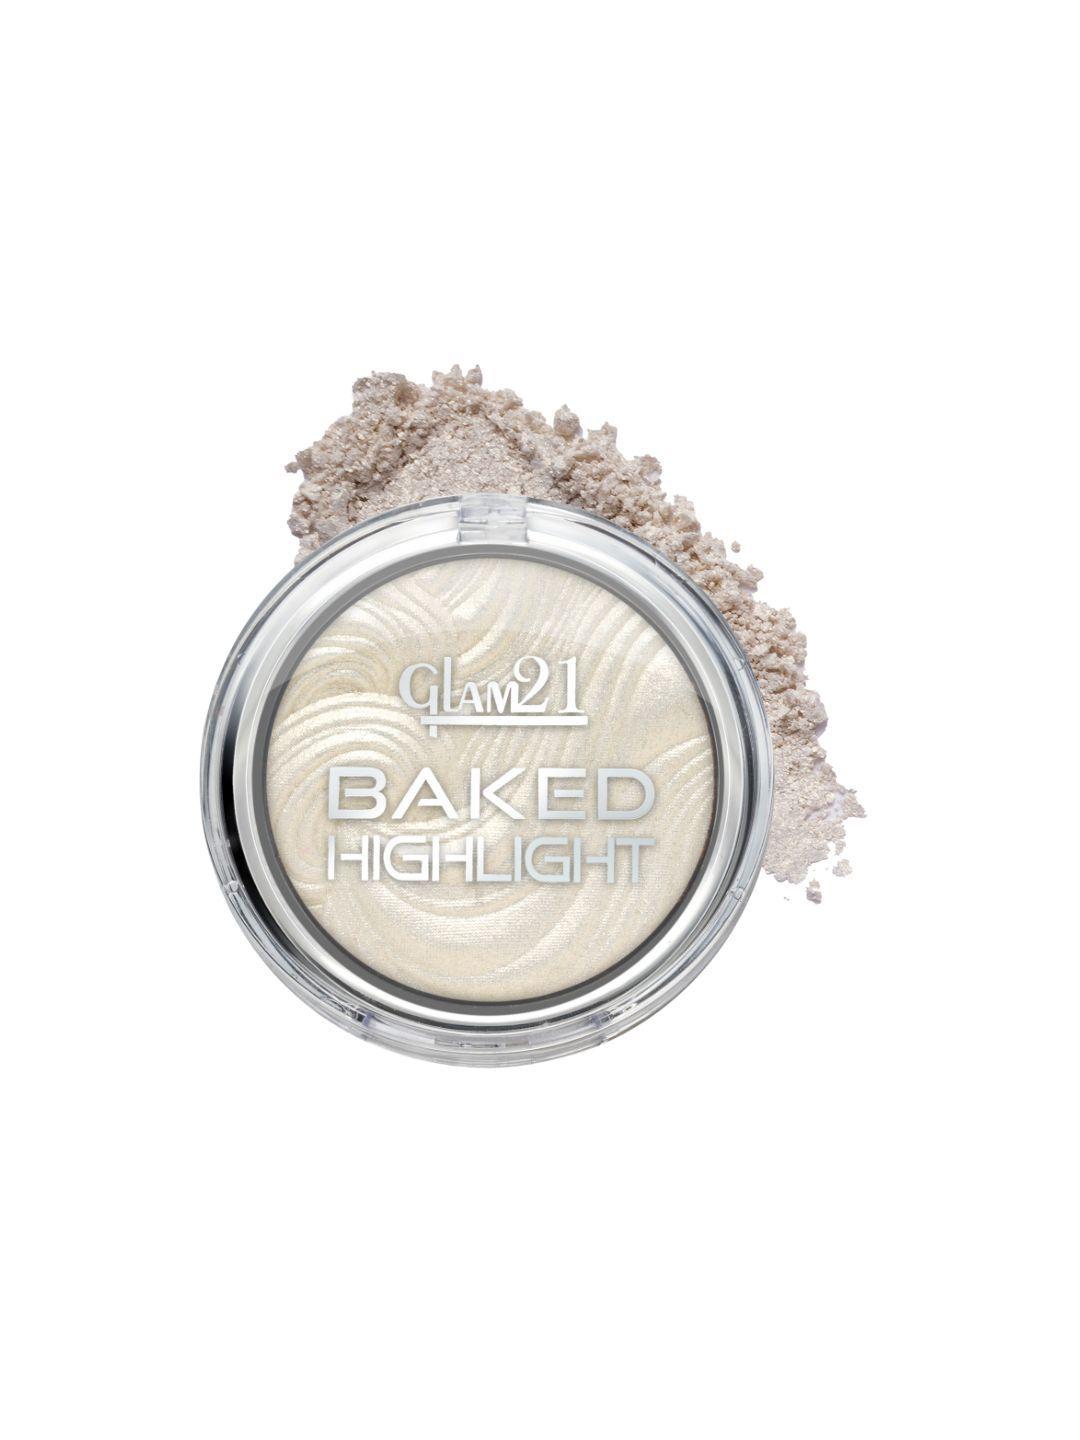 glam21 silky pigments metallic finish long lasting shimmer baked highlighter 8g - shade 01